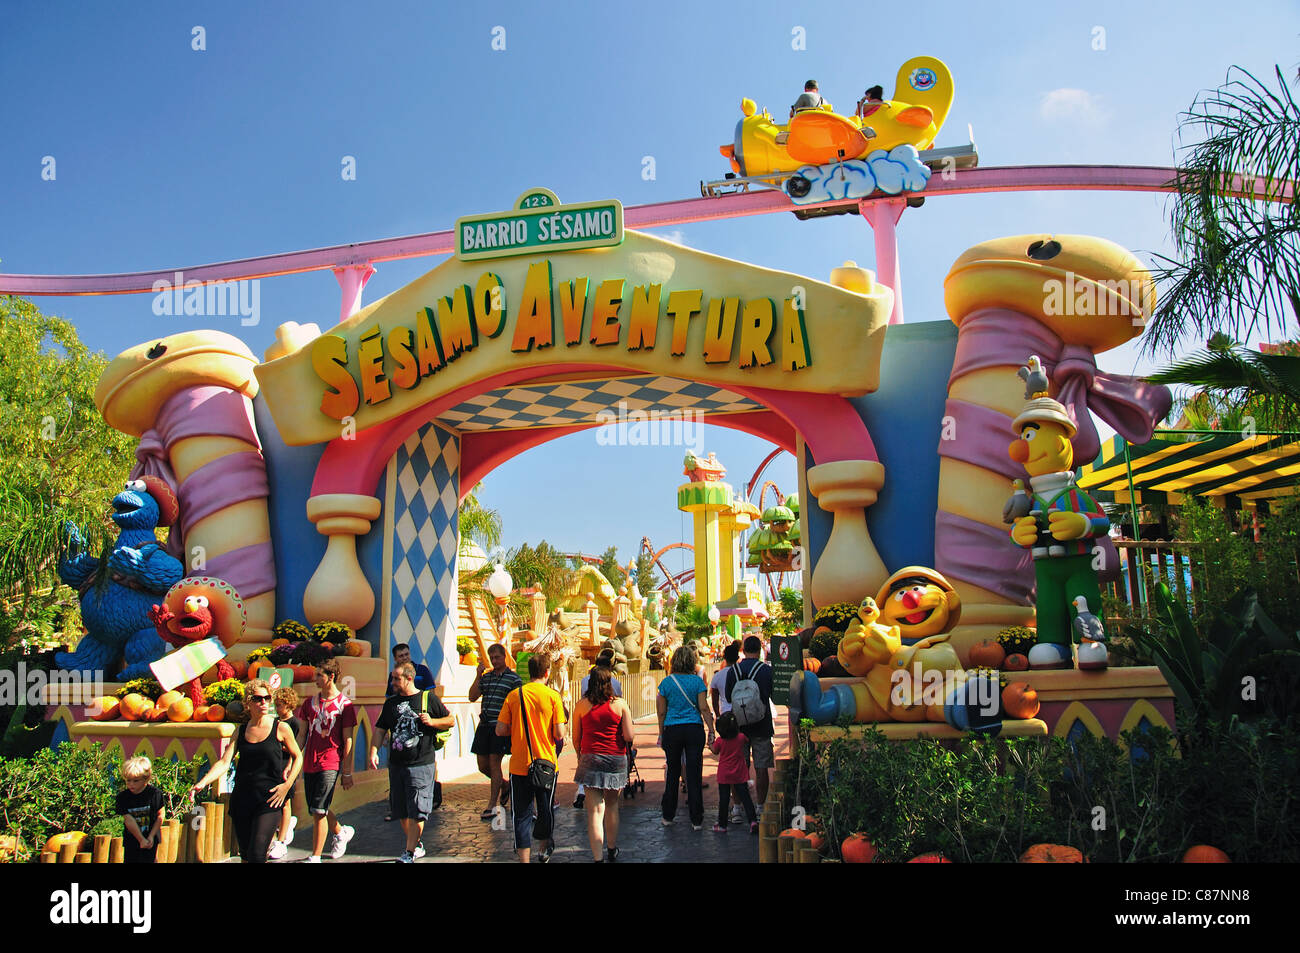 SésamoAventura entrance, PortAventura Theme Park, Salou, Costa Daurada, Province of Tarragona, Catalonia, Spain Stock Photo